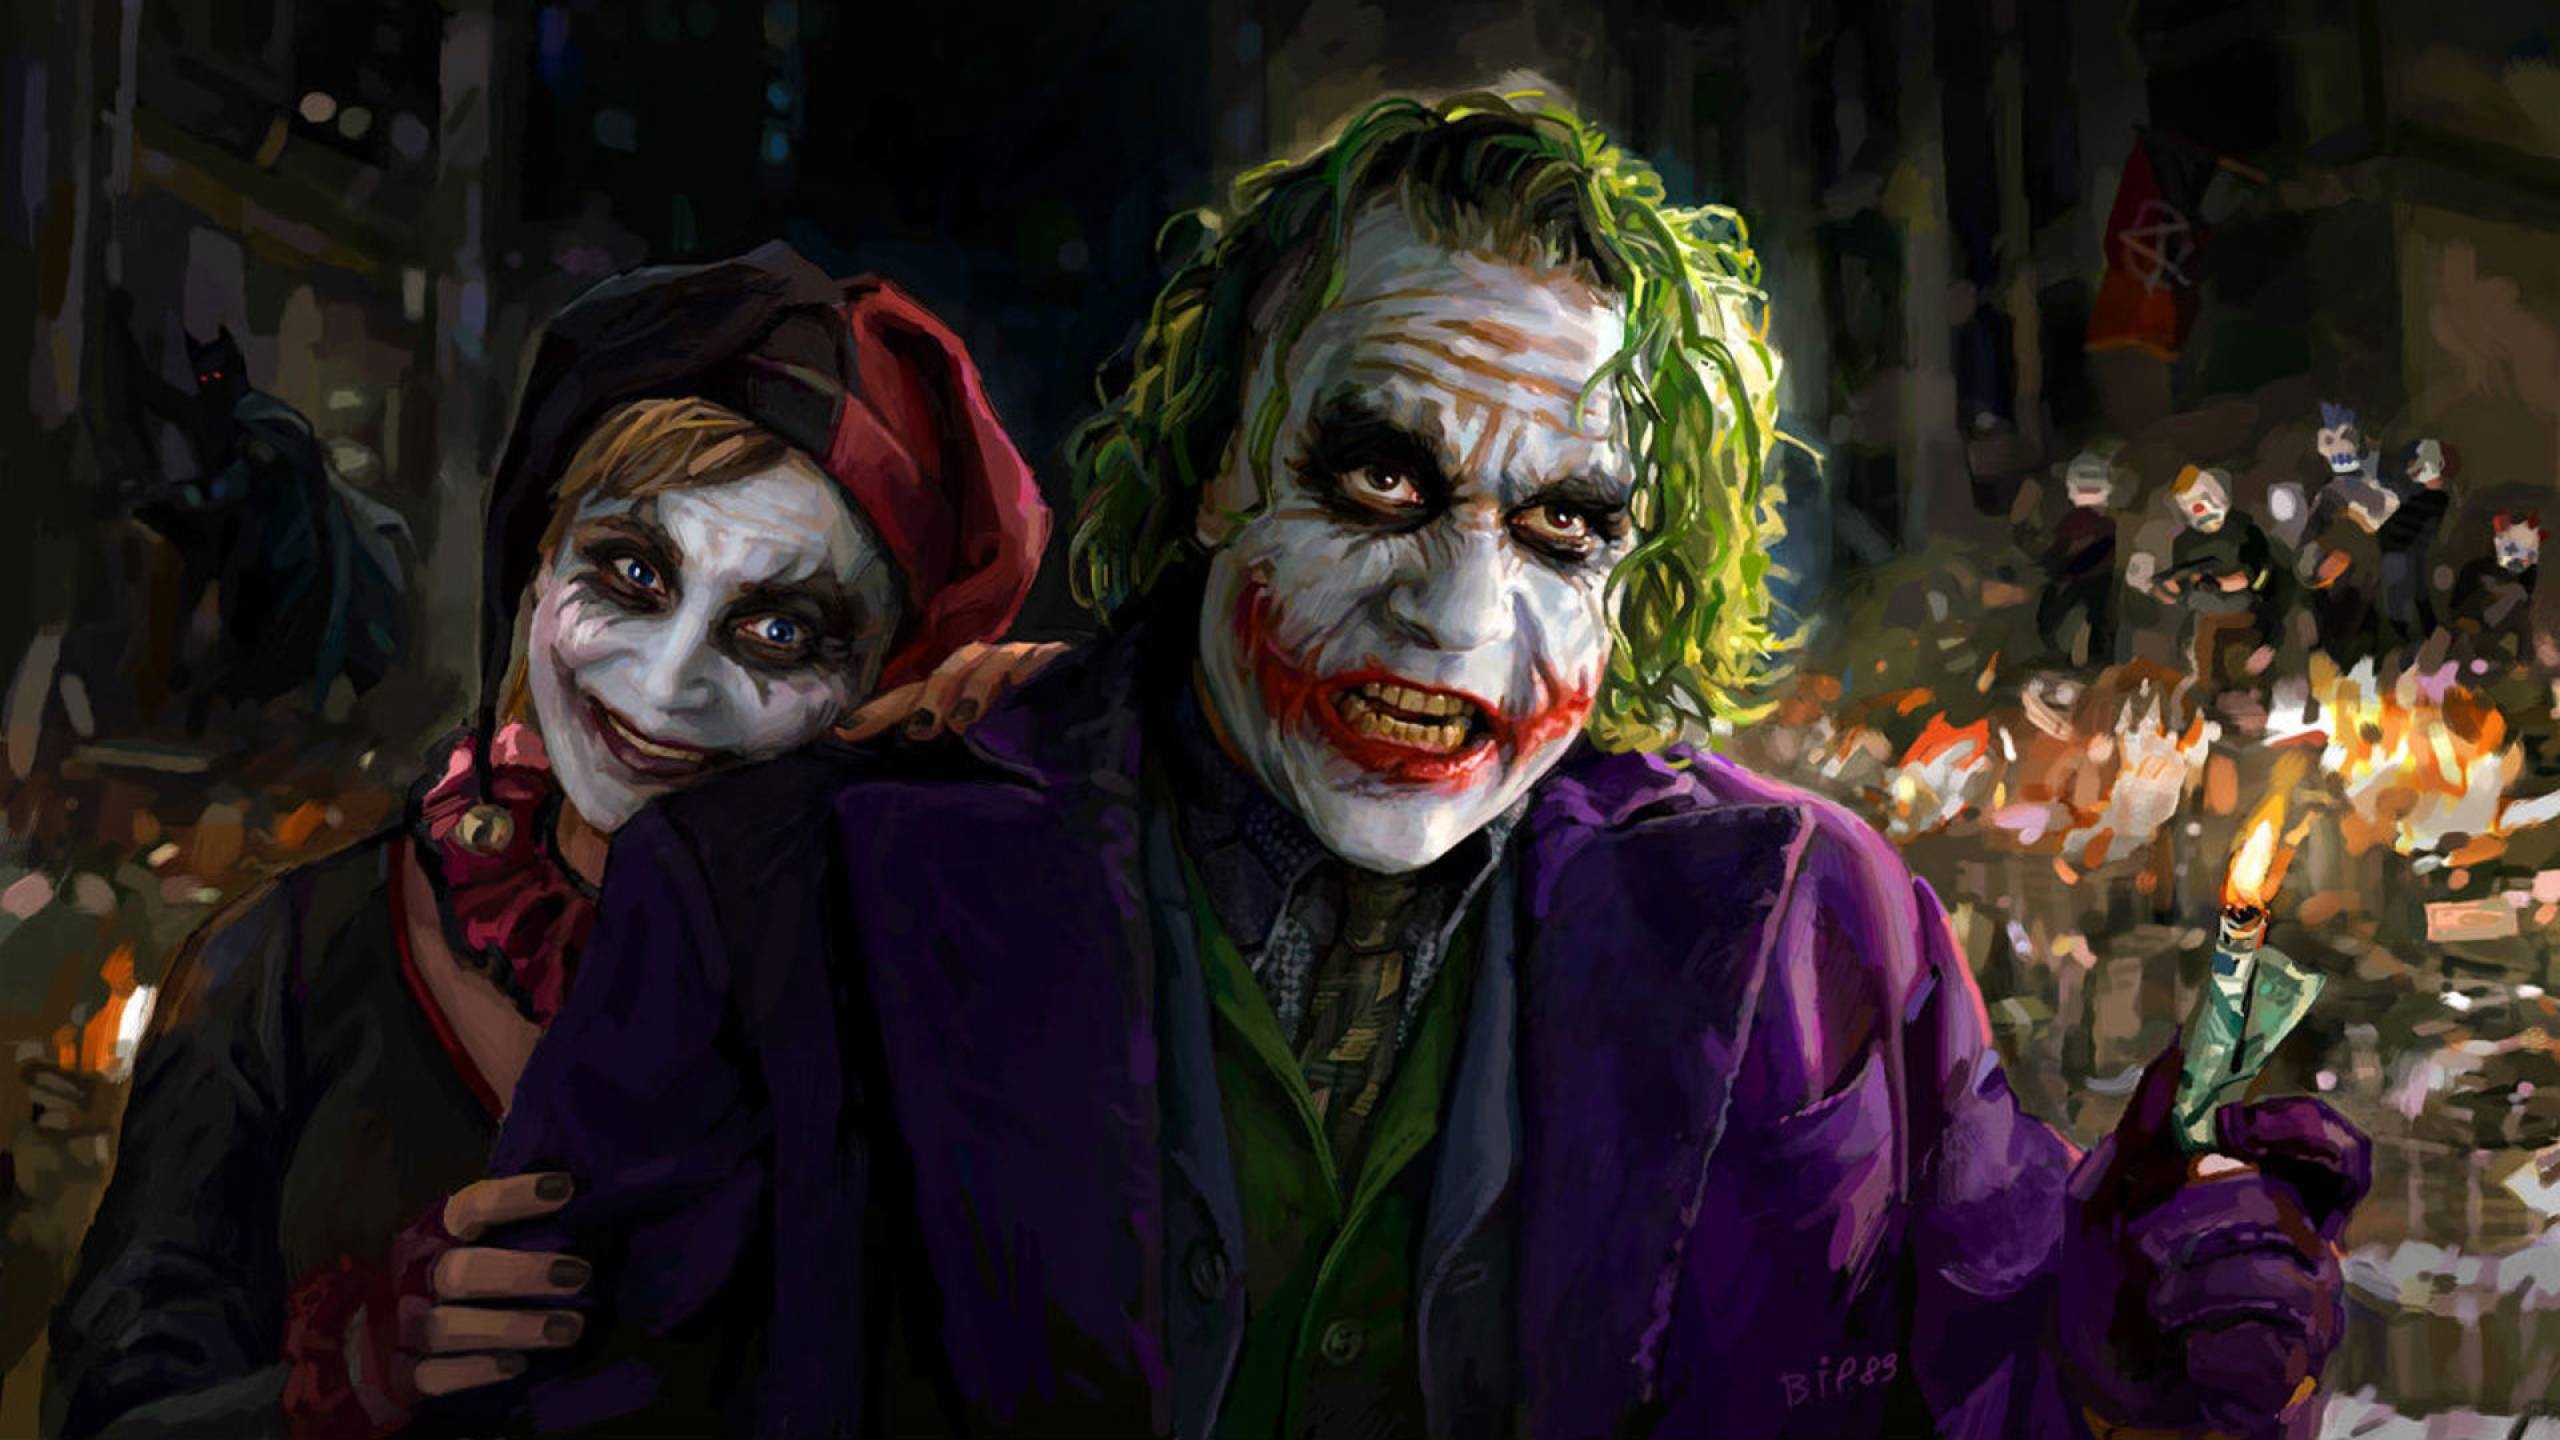 General 2560x1440 Batman Heath Ledger Harley Quinn movies artwork Joker money burning digital art